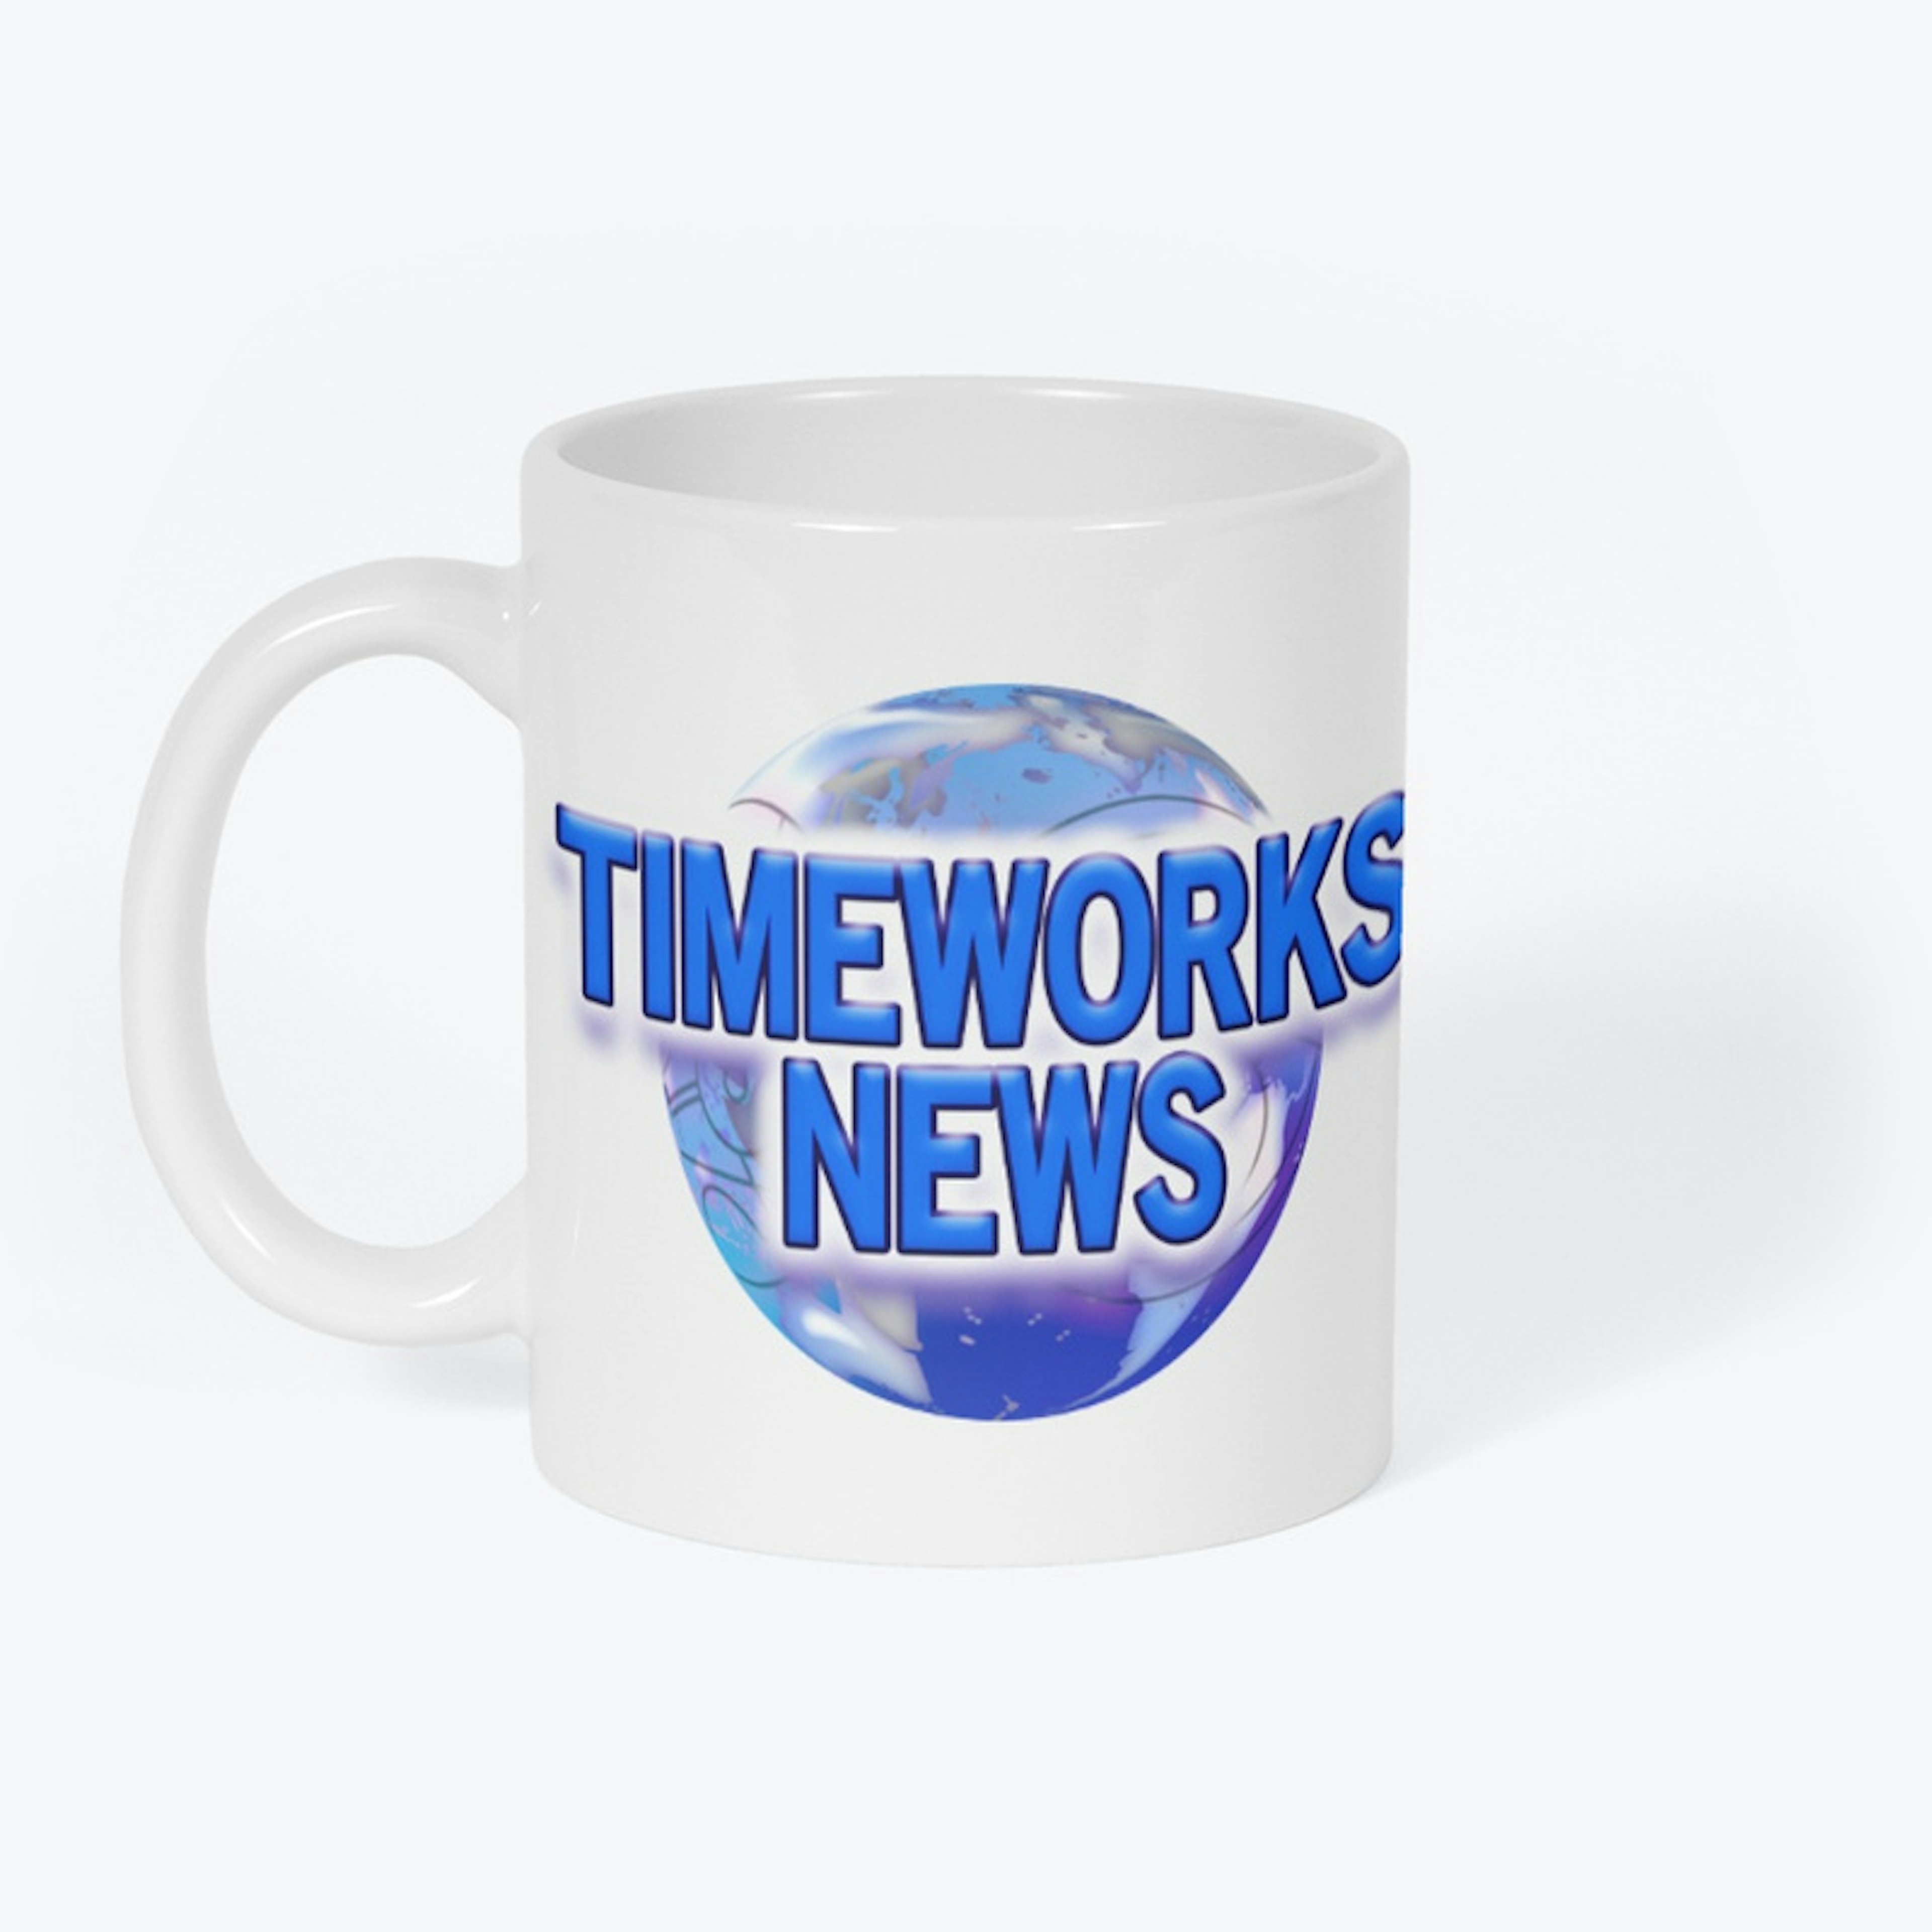 Timeworks News // Timeworks